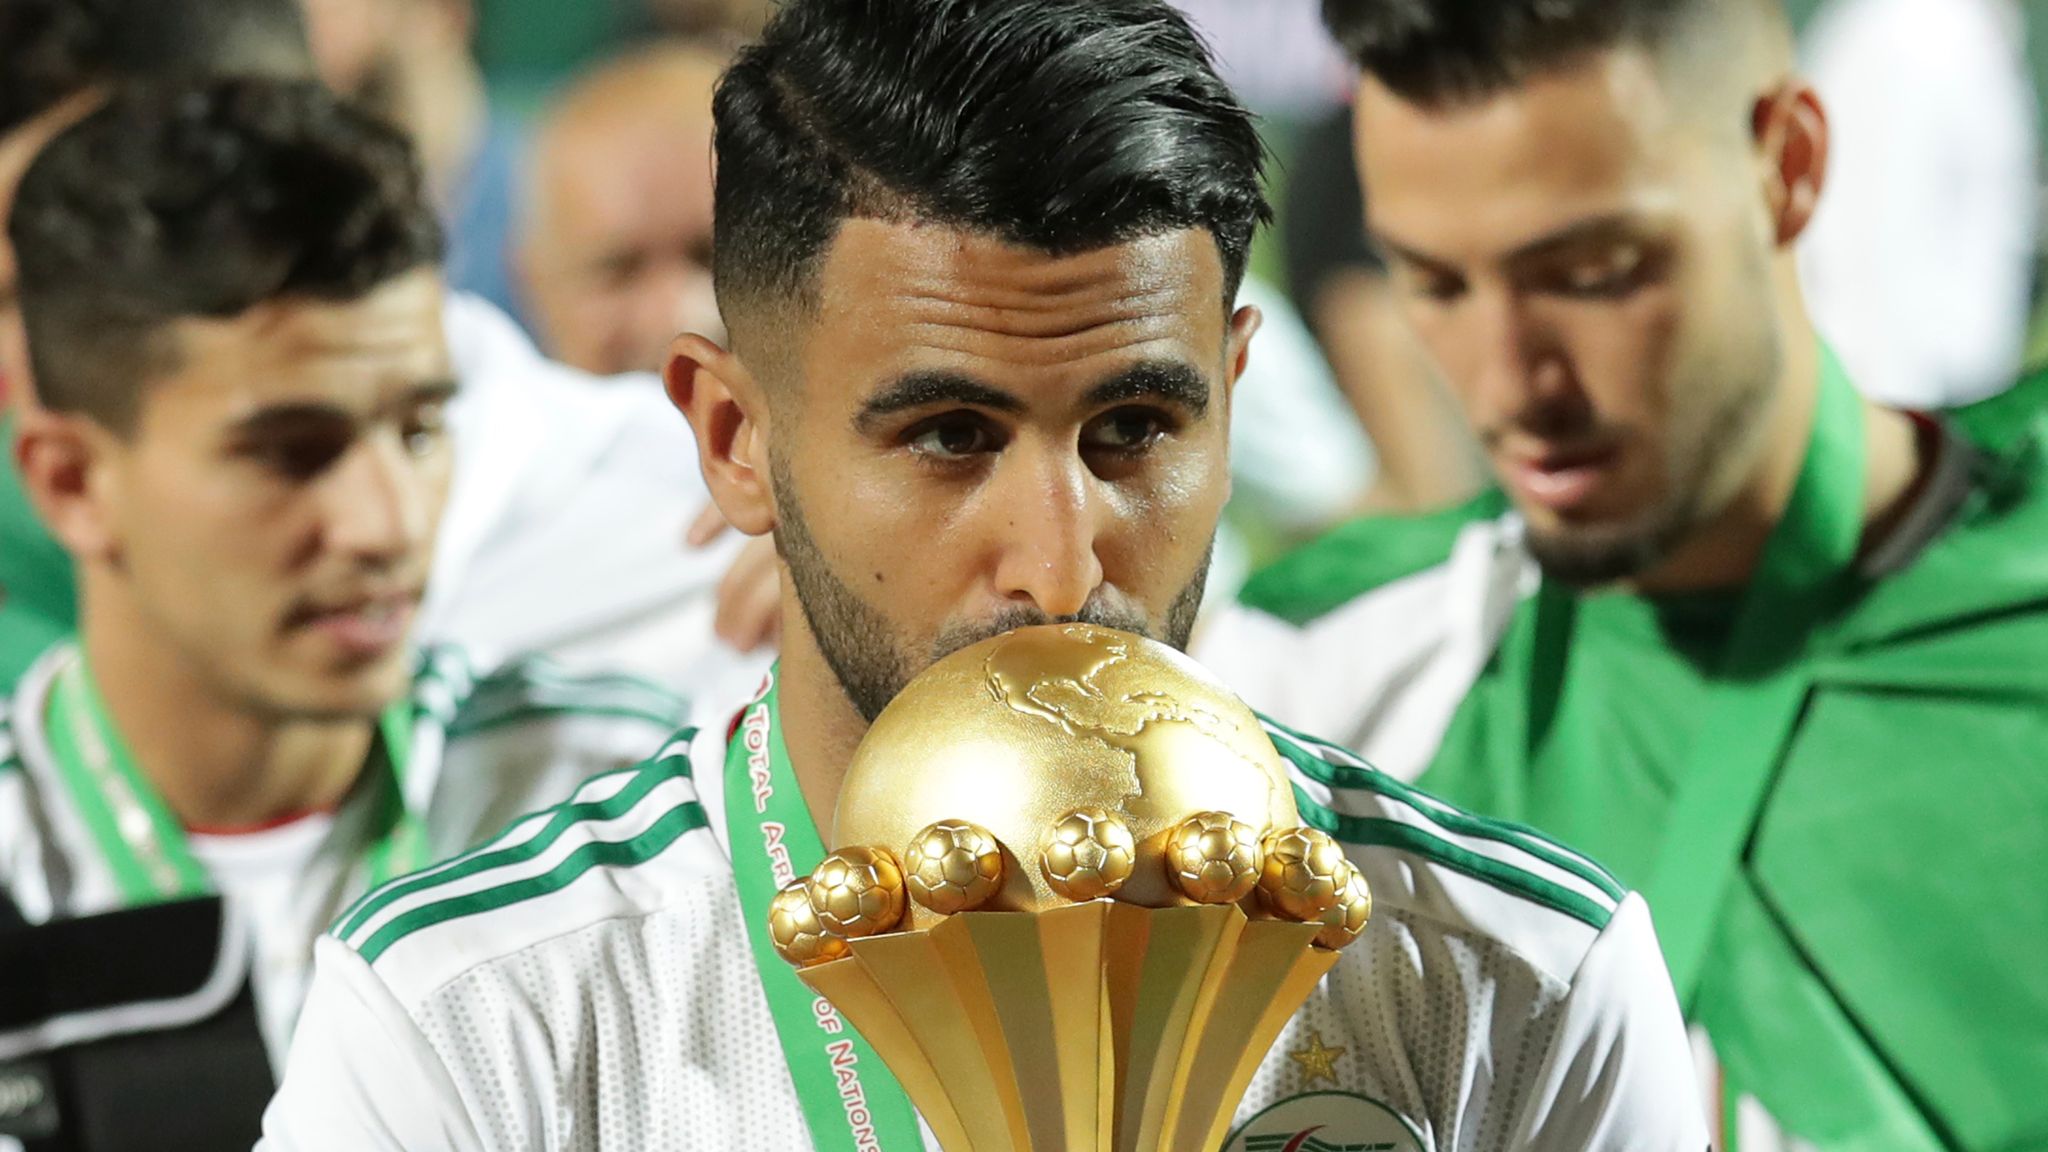 Algeria vs New Zealand, President's Cup